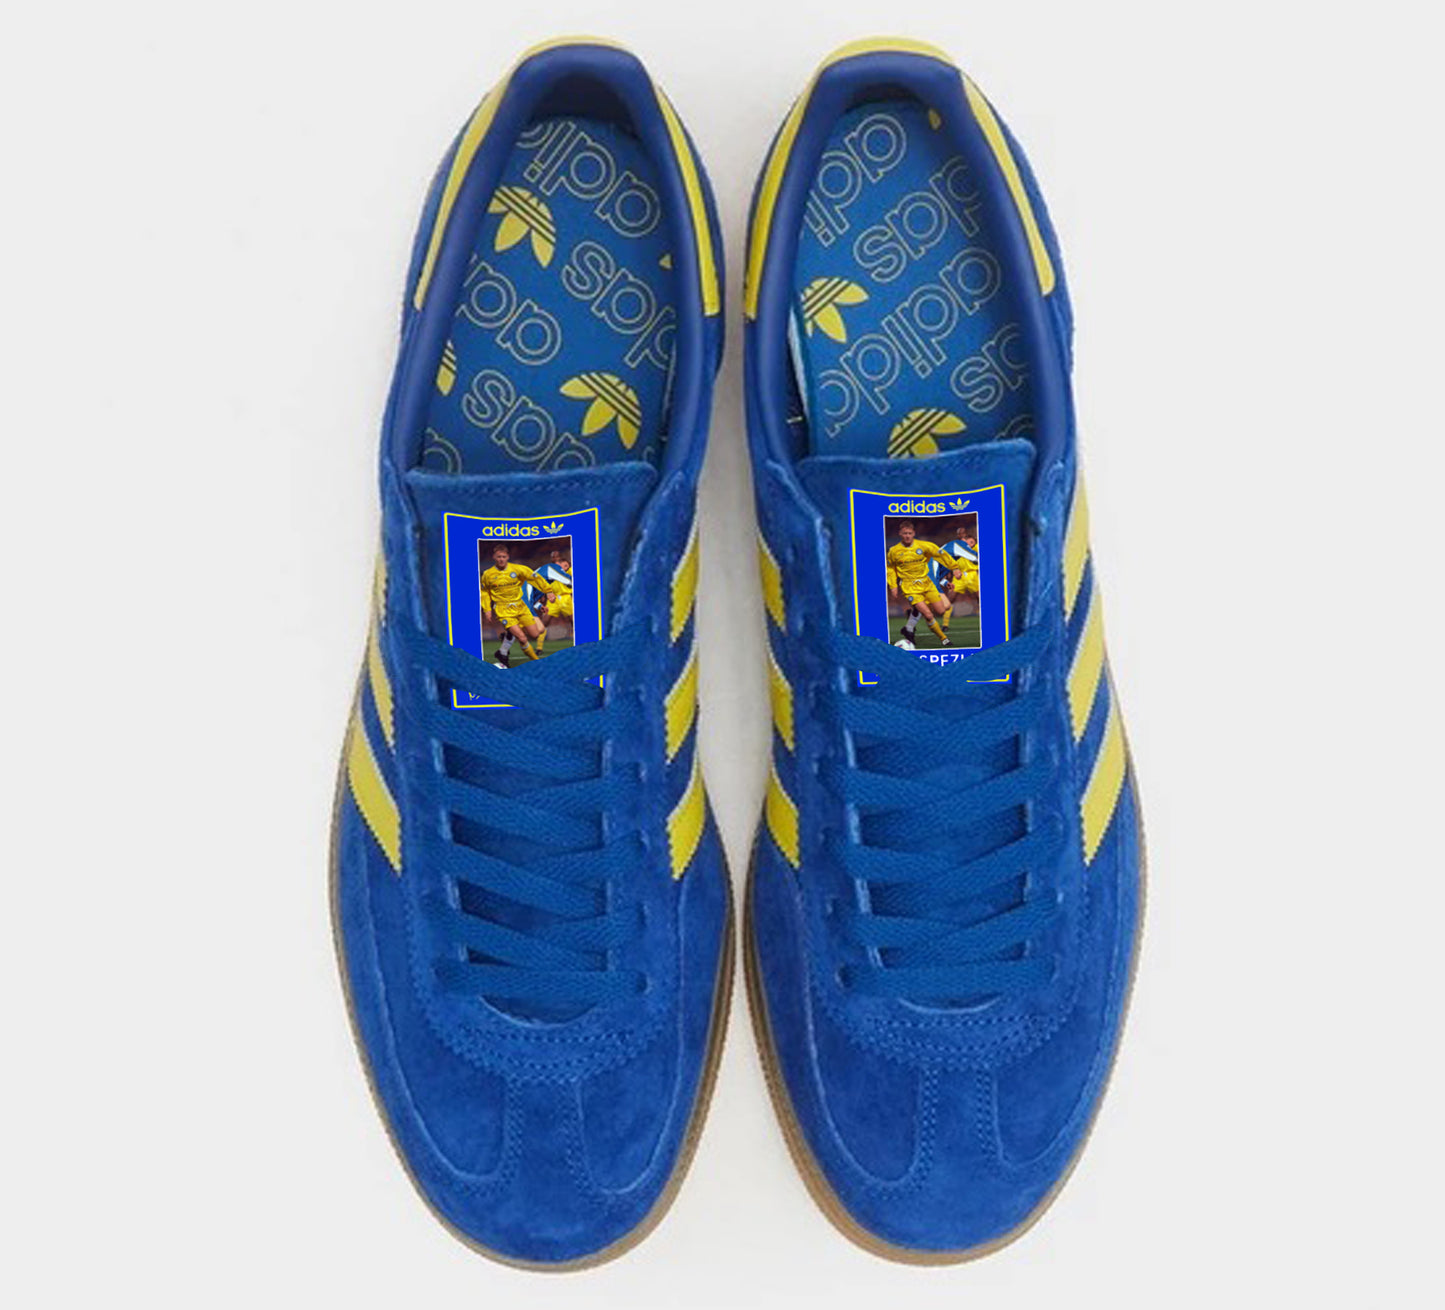 Limited edition Leeds utd FC retro David  Batty inspired blue / yellow suede adidas handball spezial trainers